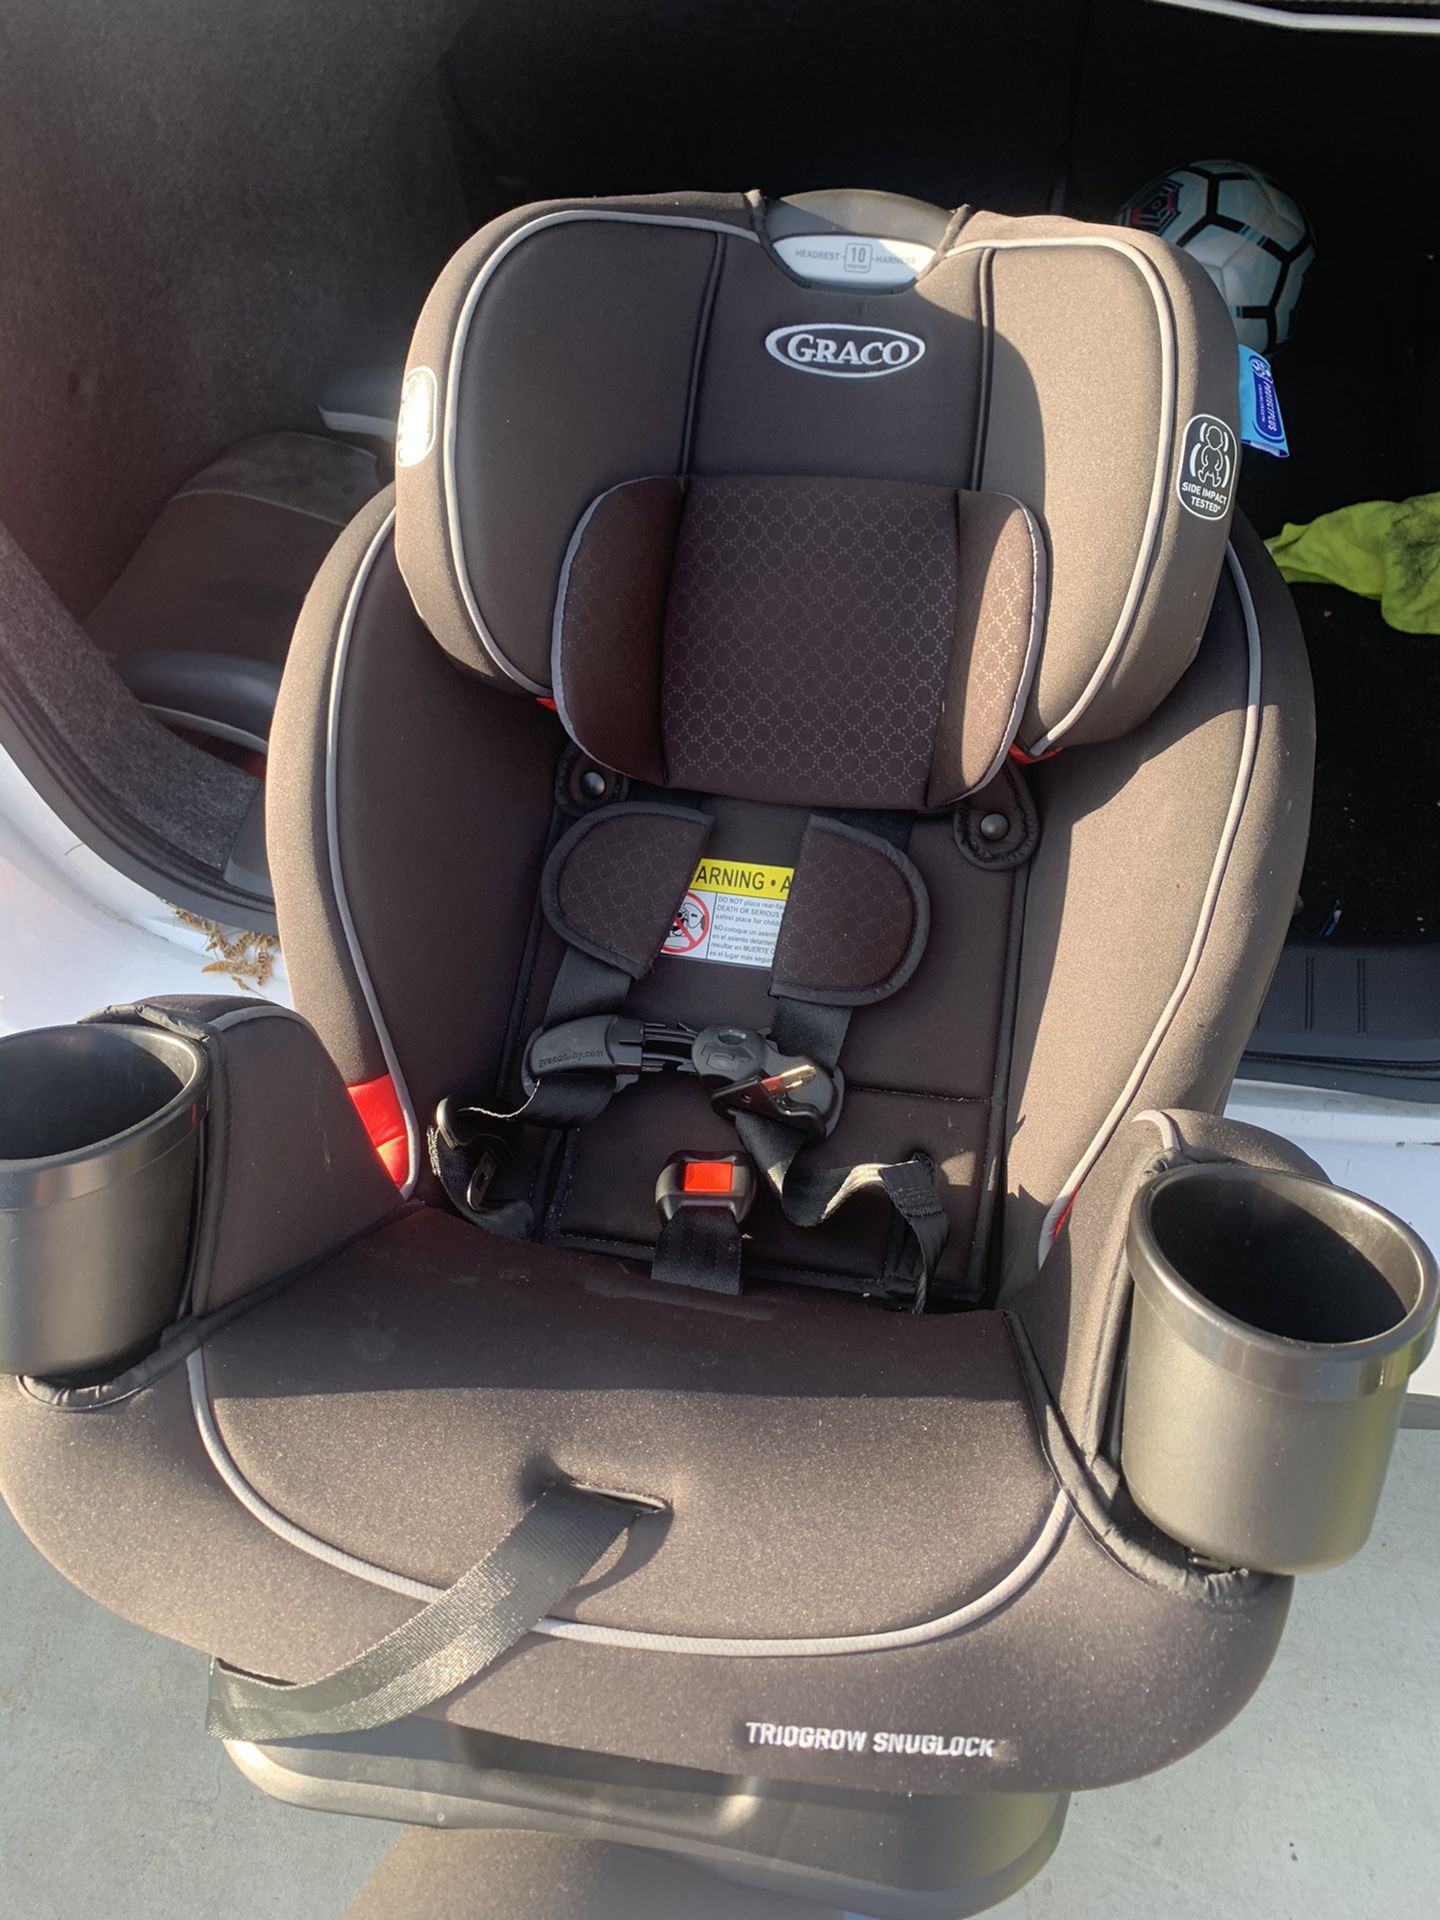 Graco car seat brand new